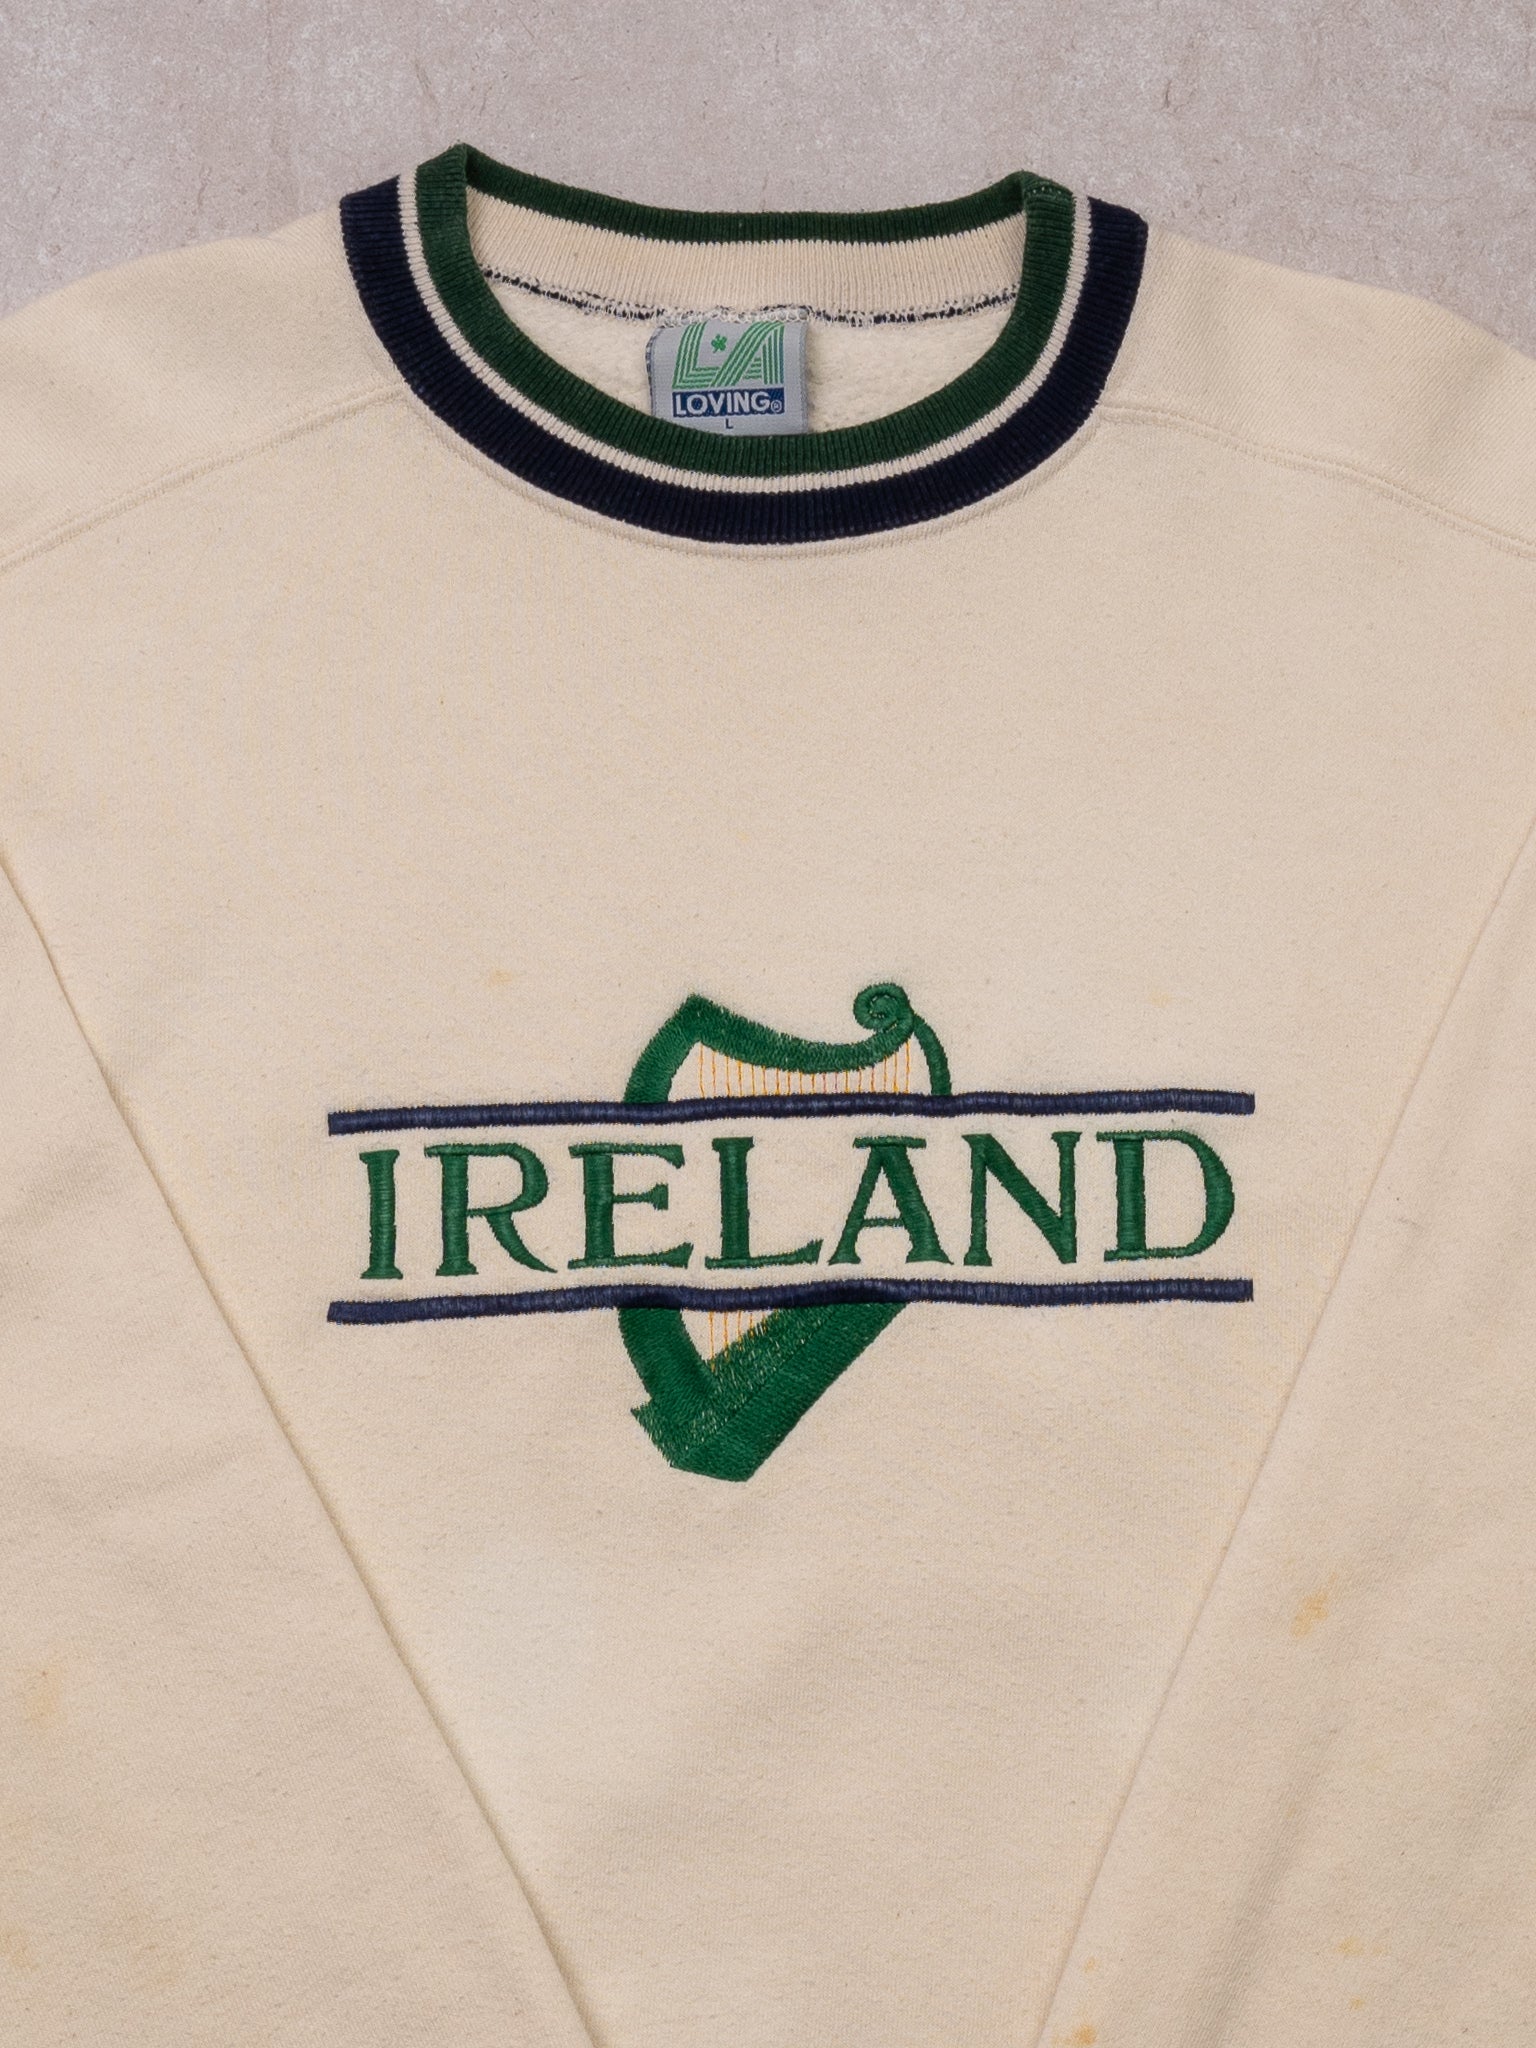 Vintage 90s Cream + Blue + Green Ireland Crewneck (M)